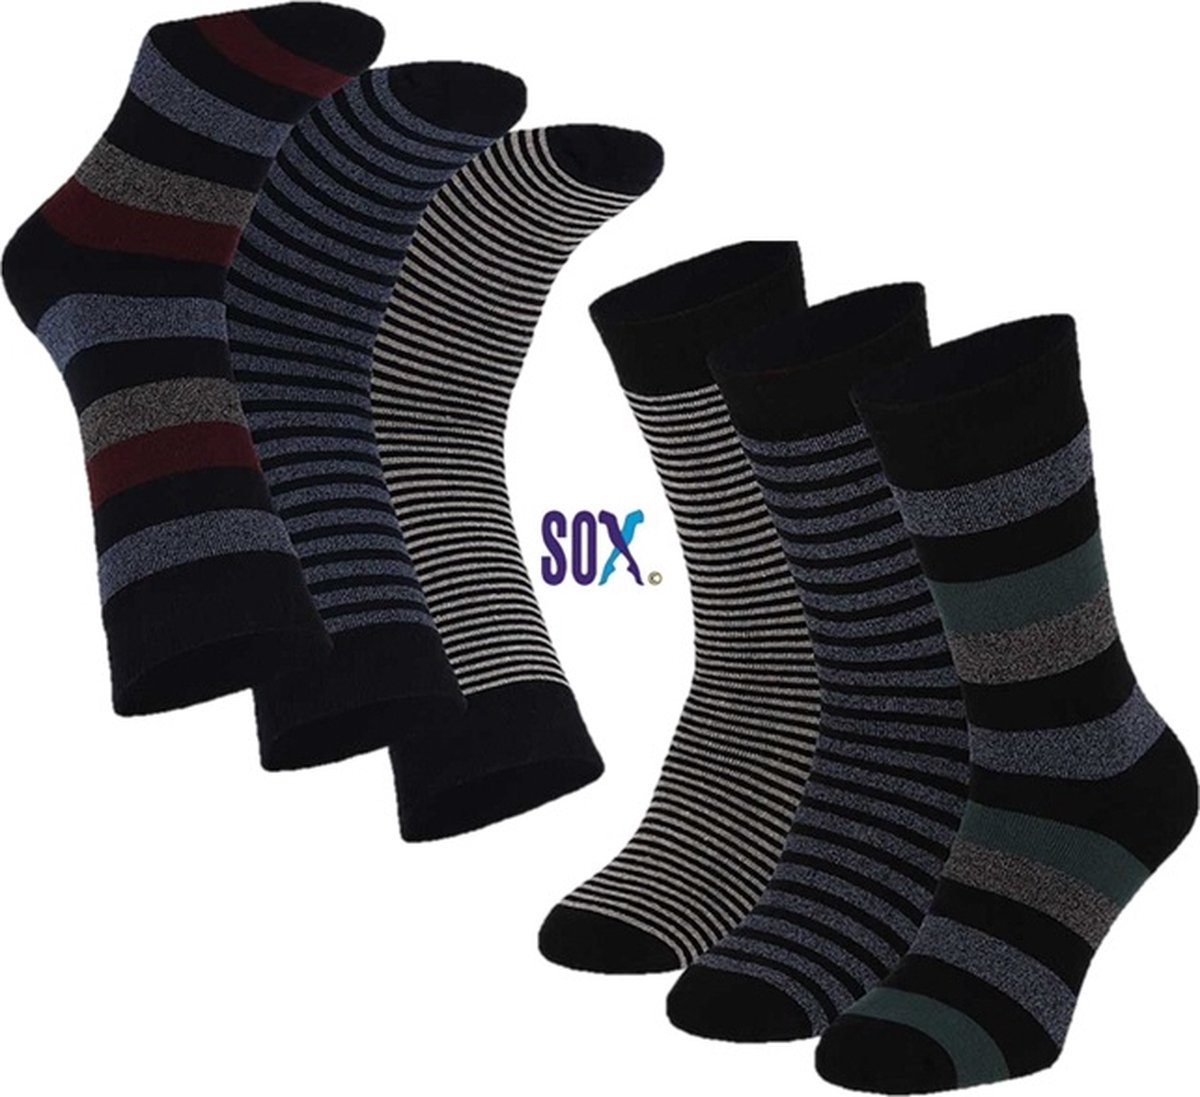 SOX Thermische Full Terry 6 PACK Unisex sokken 40/46 Fantasie streep assorti Marine mix en Zwart mix Sterk en Naadloos